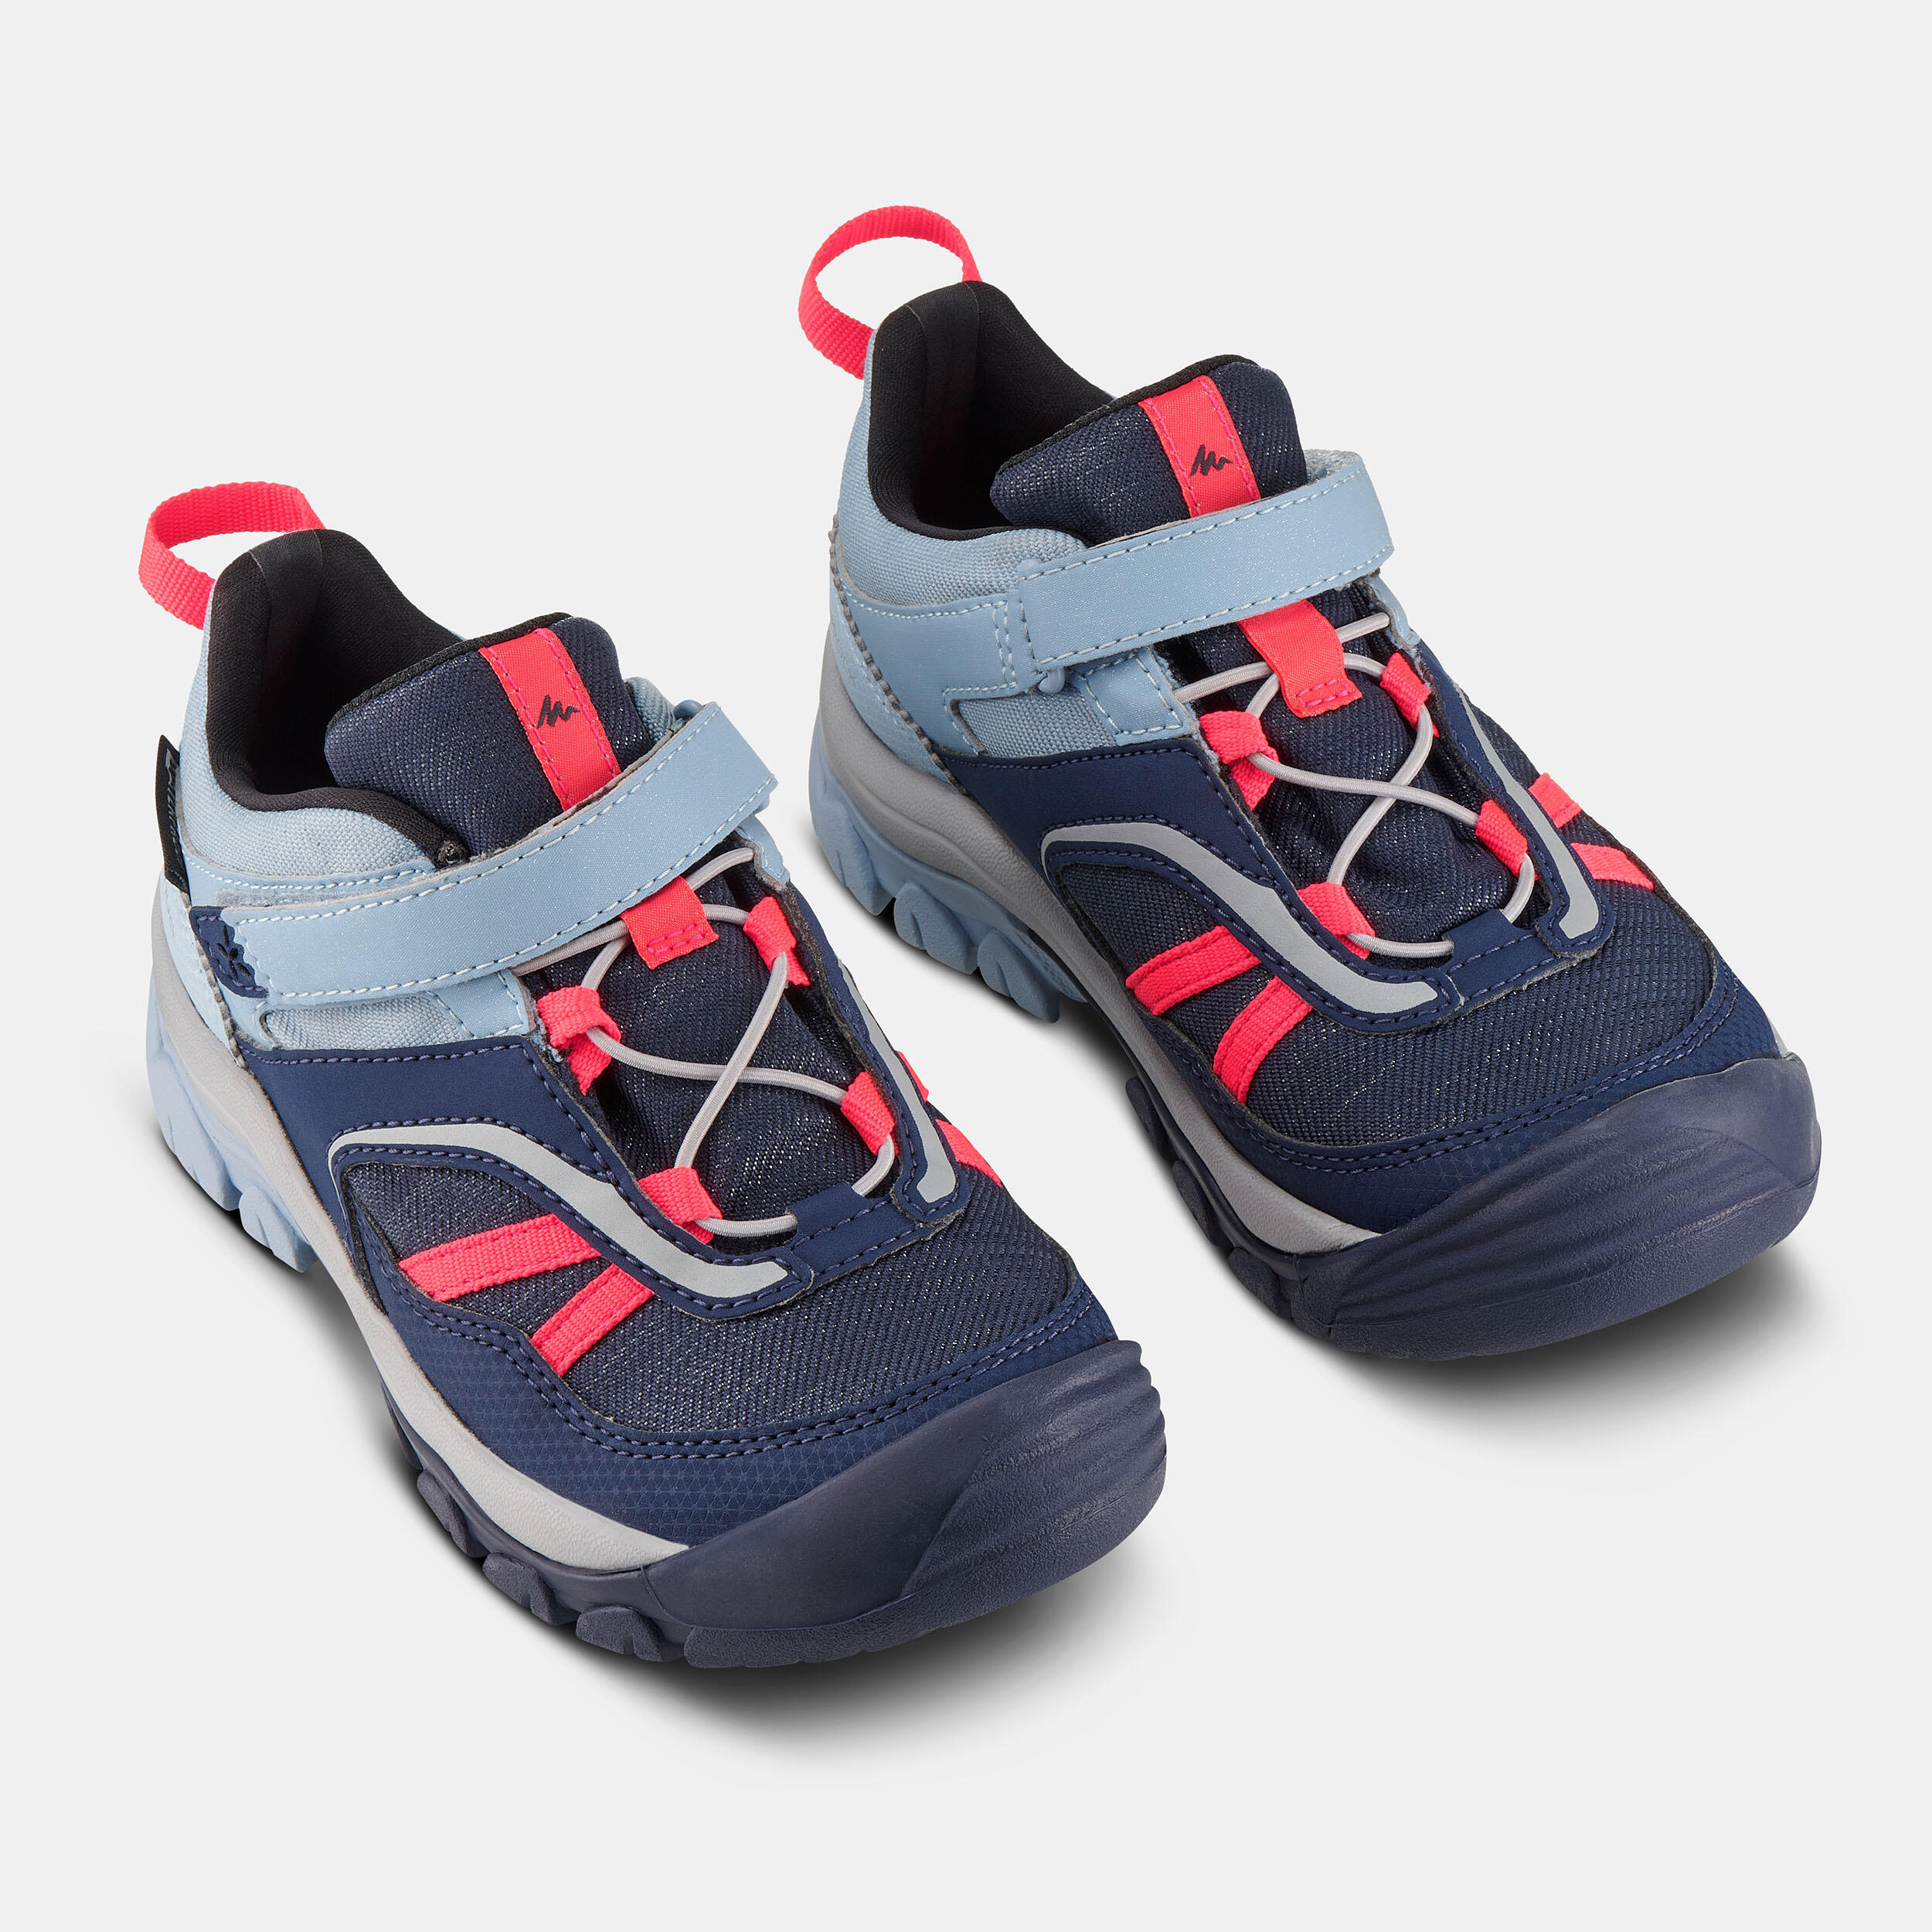 Chaussures de randonnée enfant – Crossrock bleu/rose - QUECHUA